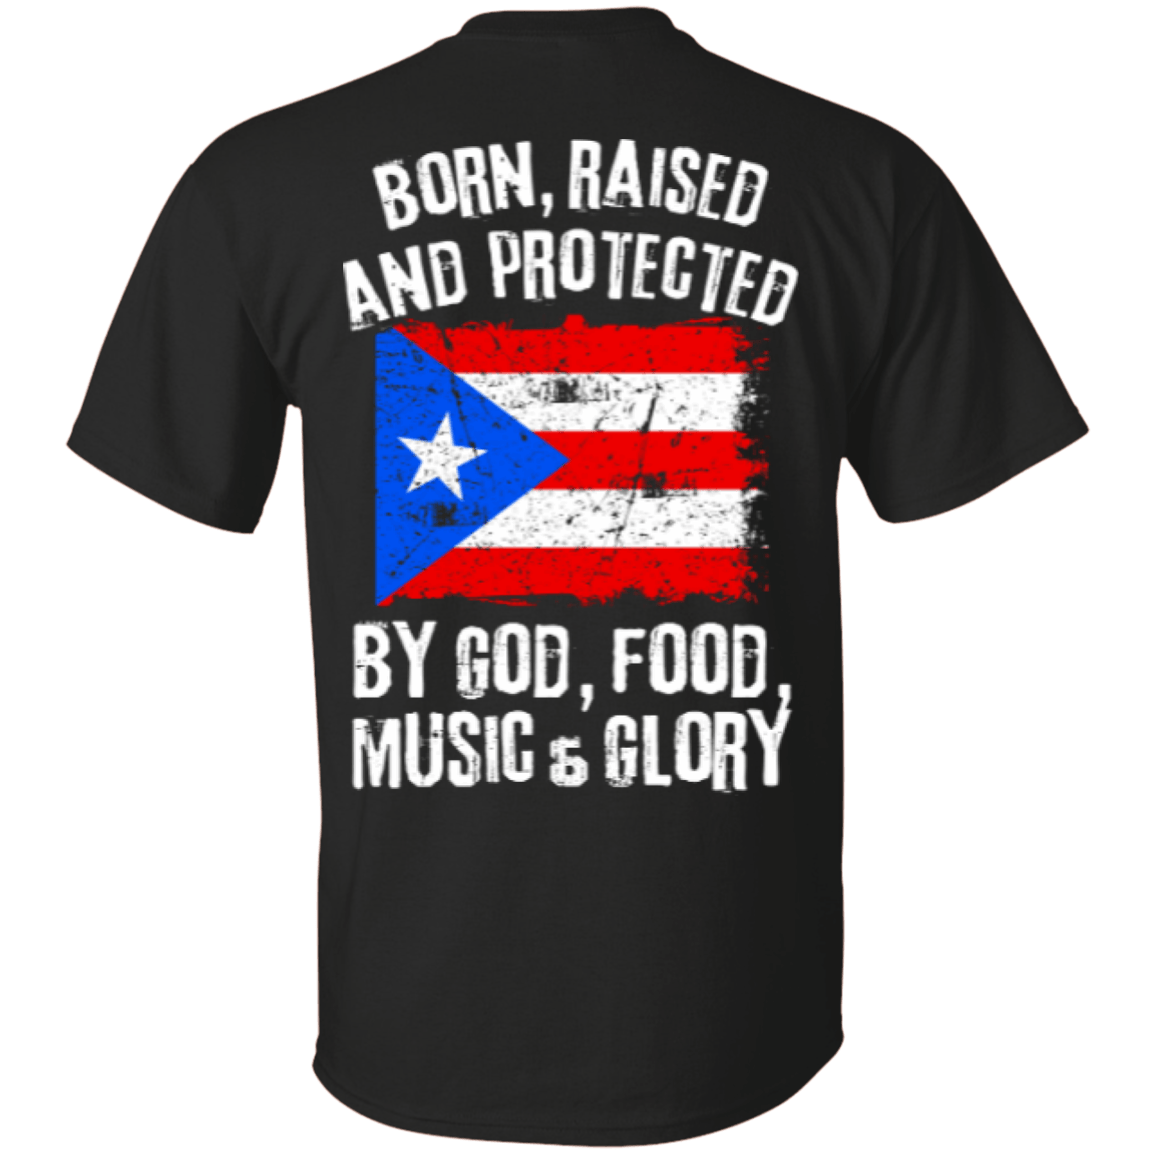 Shirt - God, Food, Music & Glory